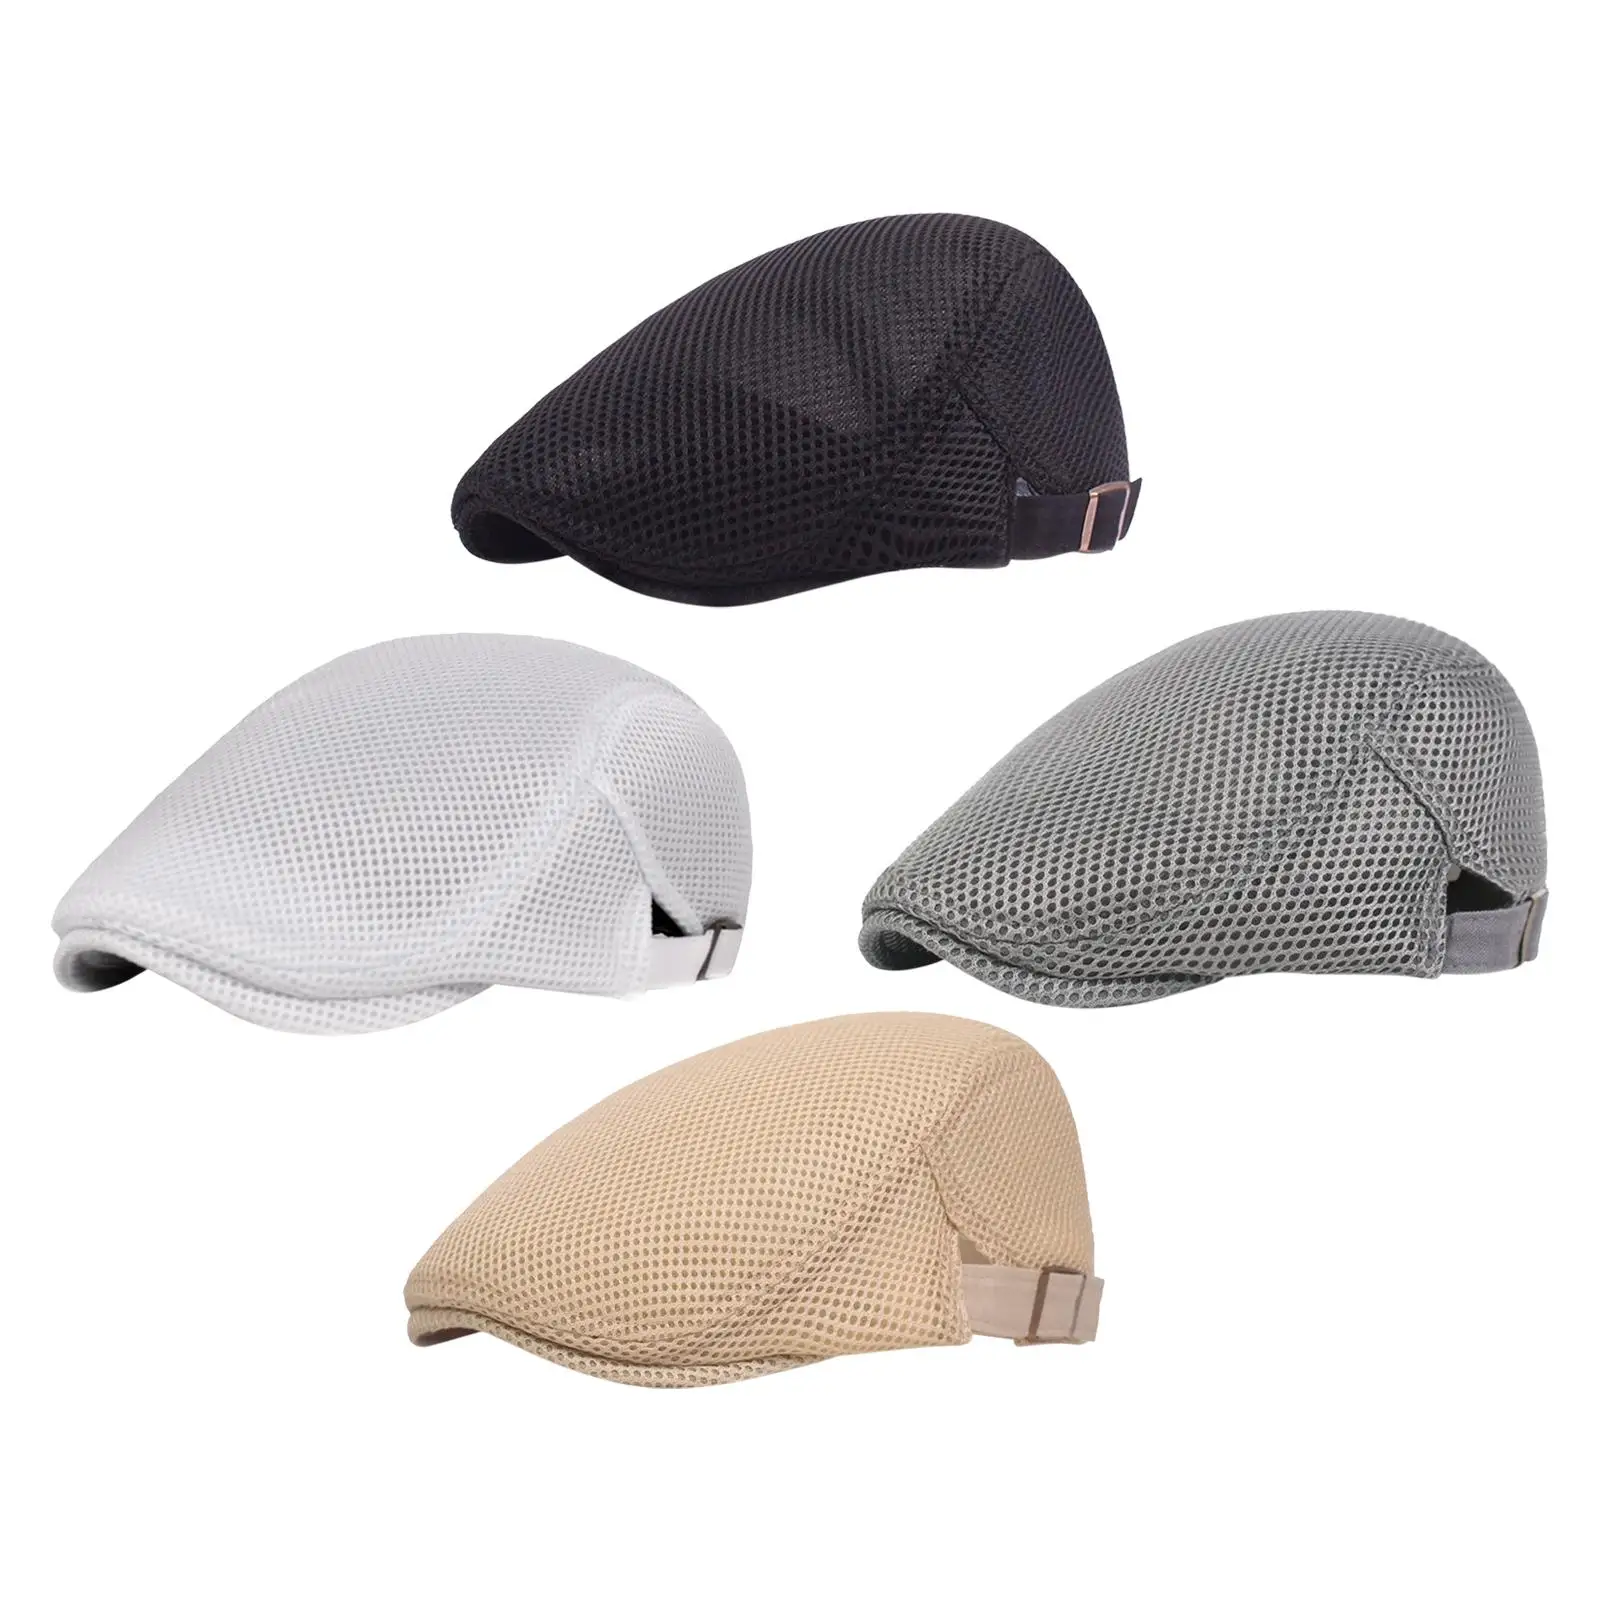 Men`s Mesh Flat Cap Sports Hat Forward Cap Visor Hat Newsboy Hat Breathable Summer Hat for Golf Driving Outdoor Travel Gardening